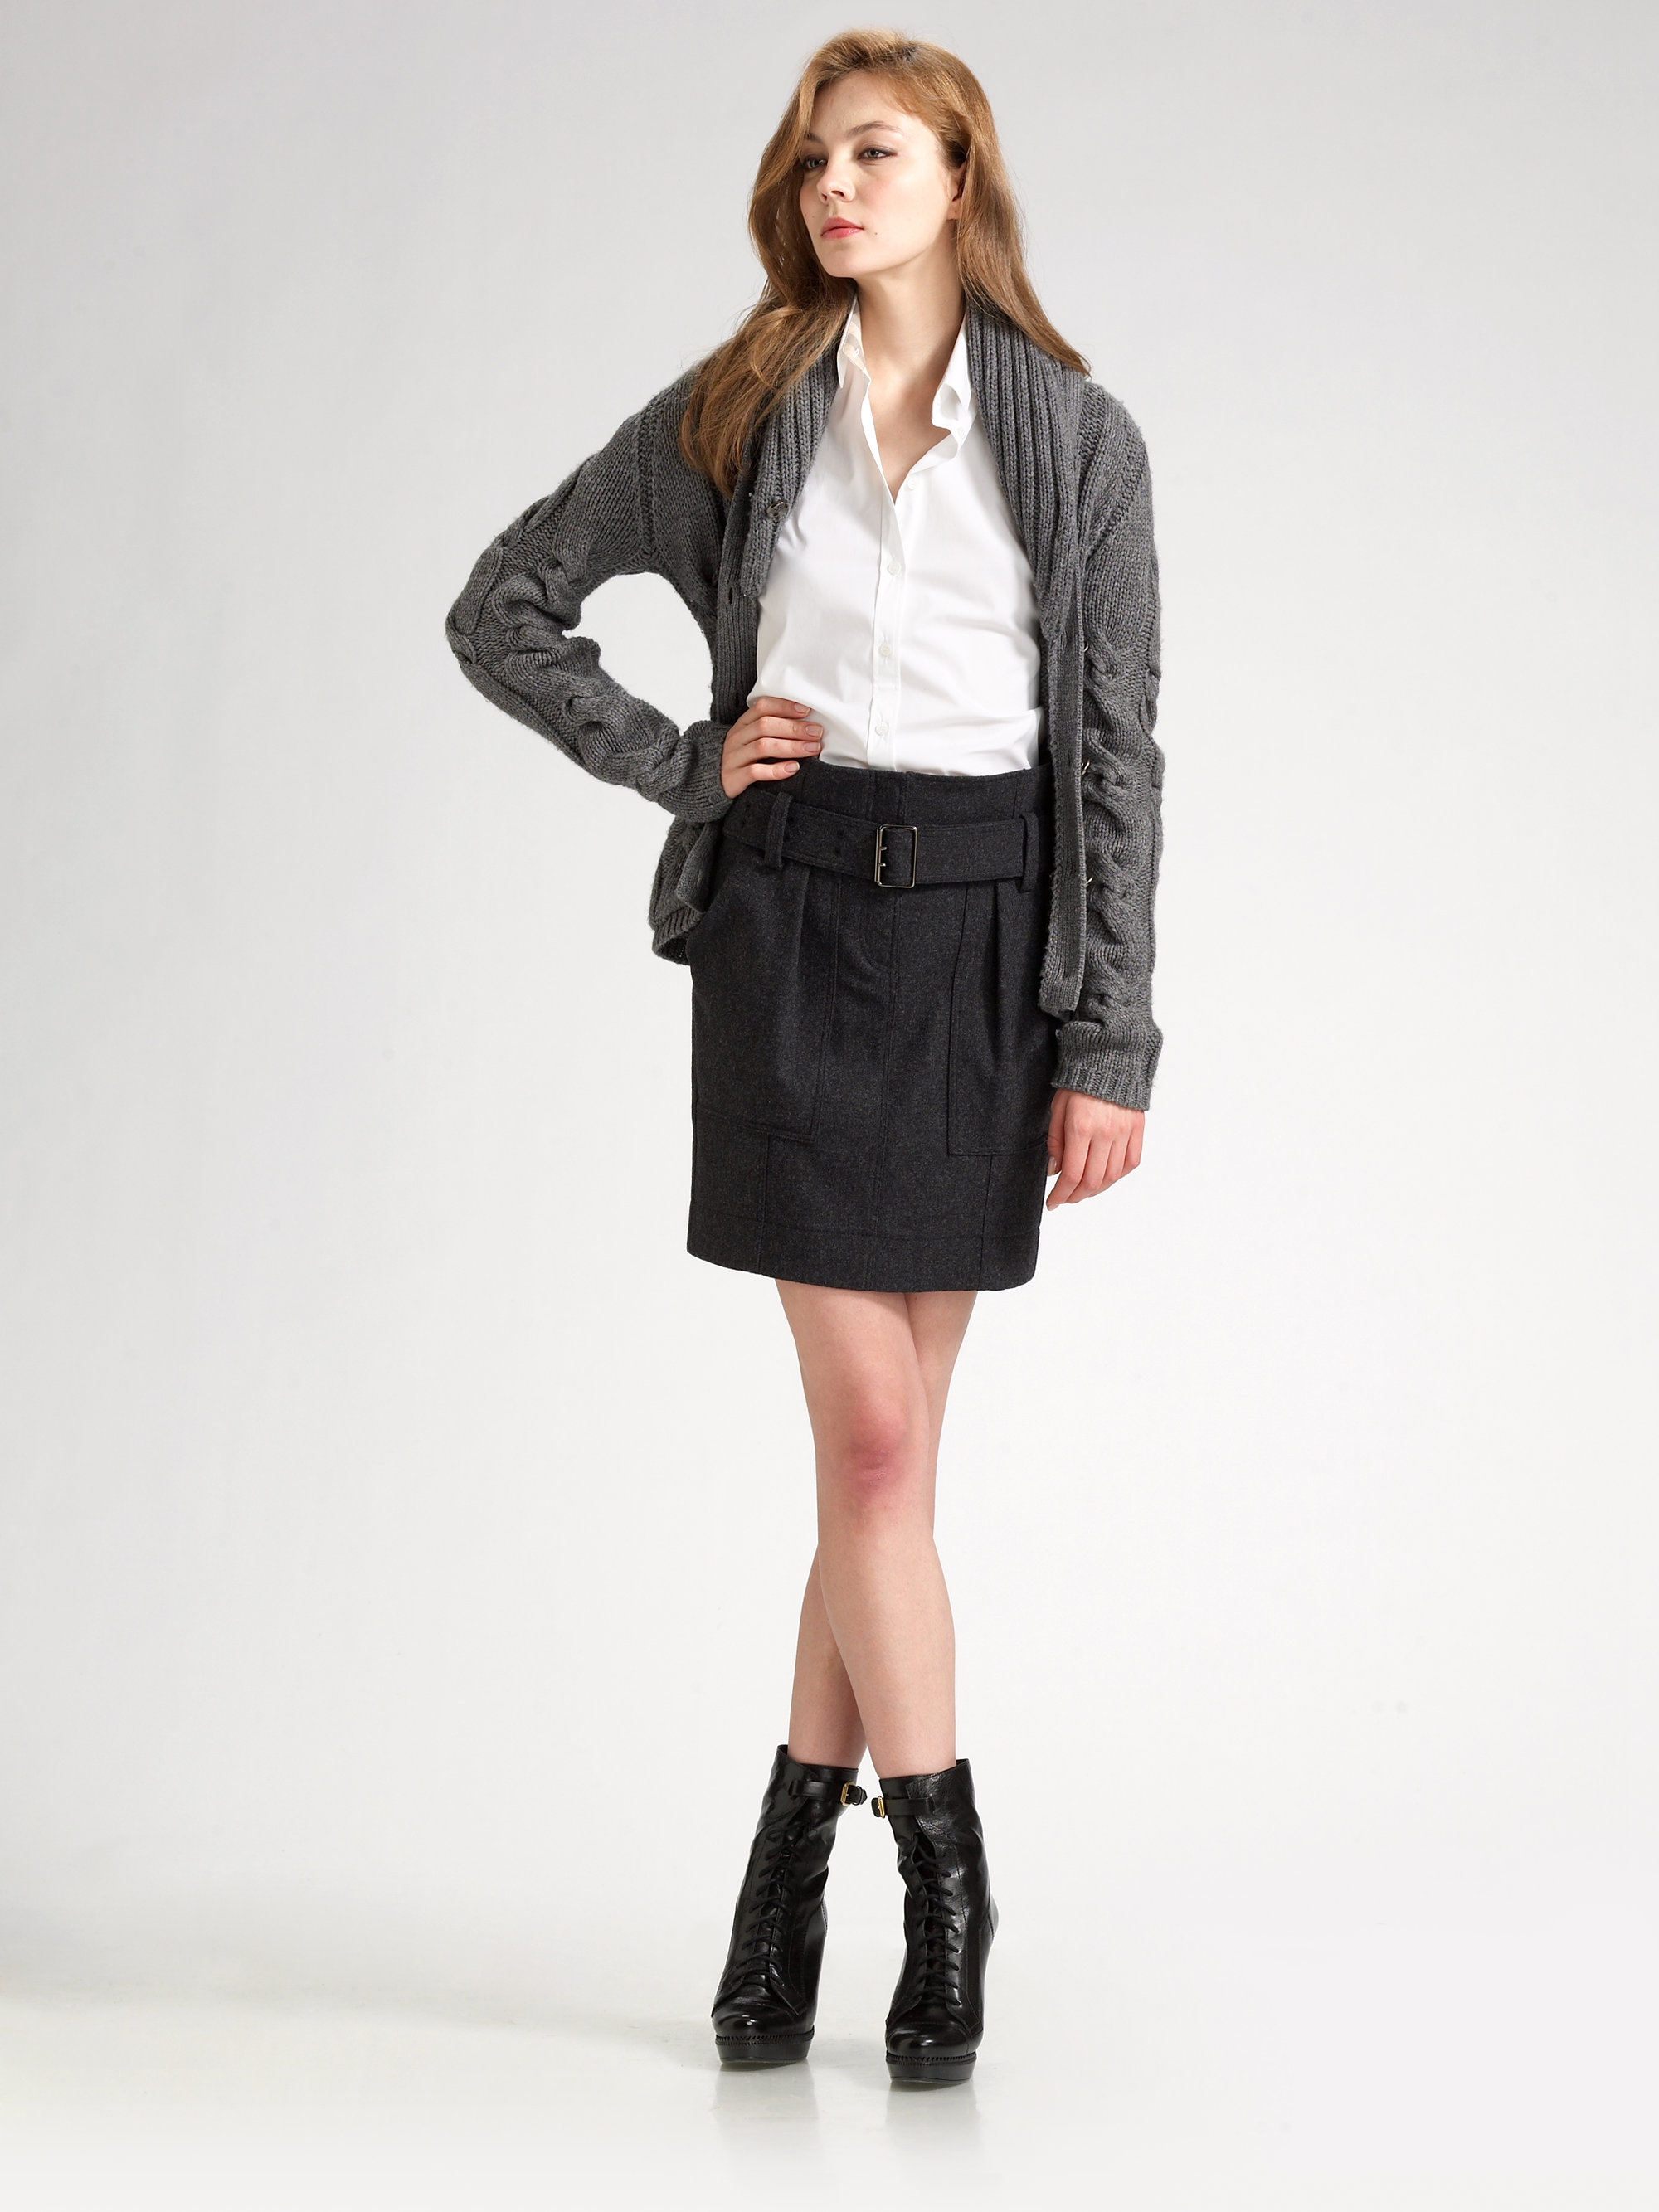 Lyst - Burberry brit Wool Flannel Skirt in Black